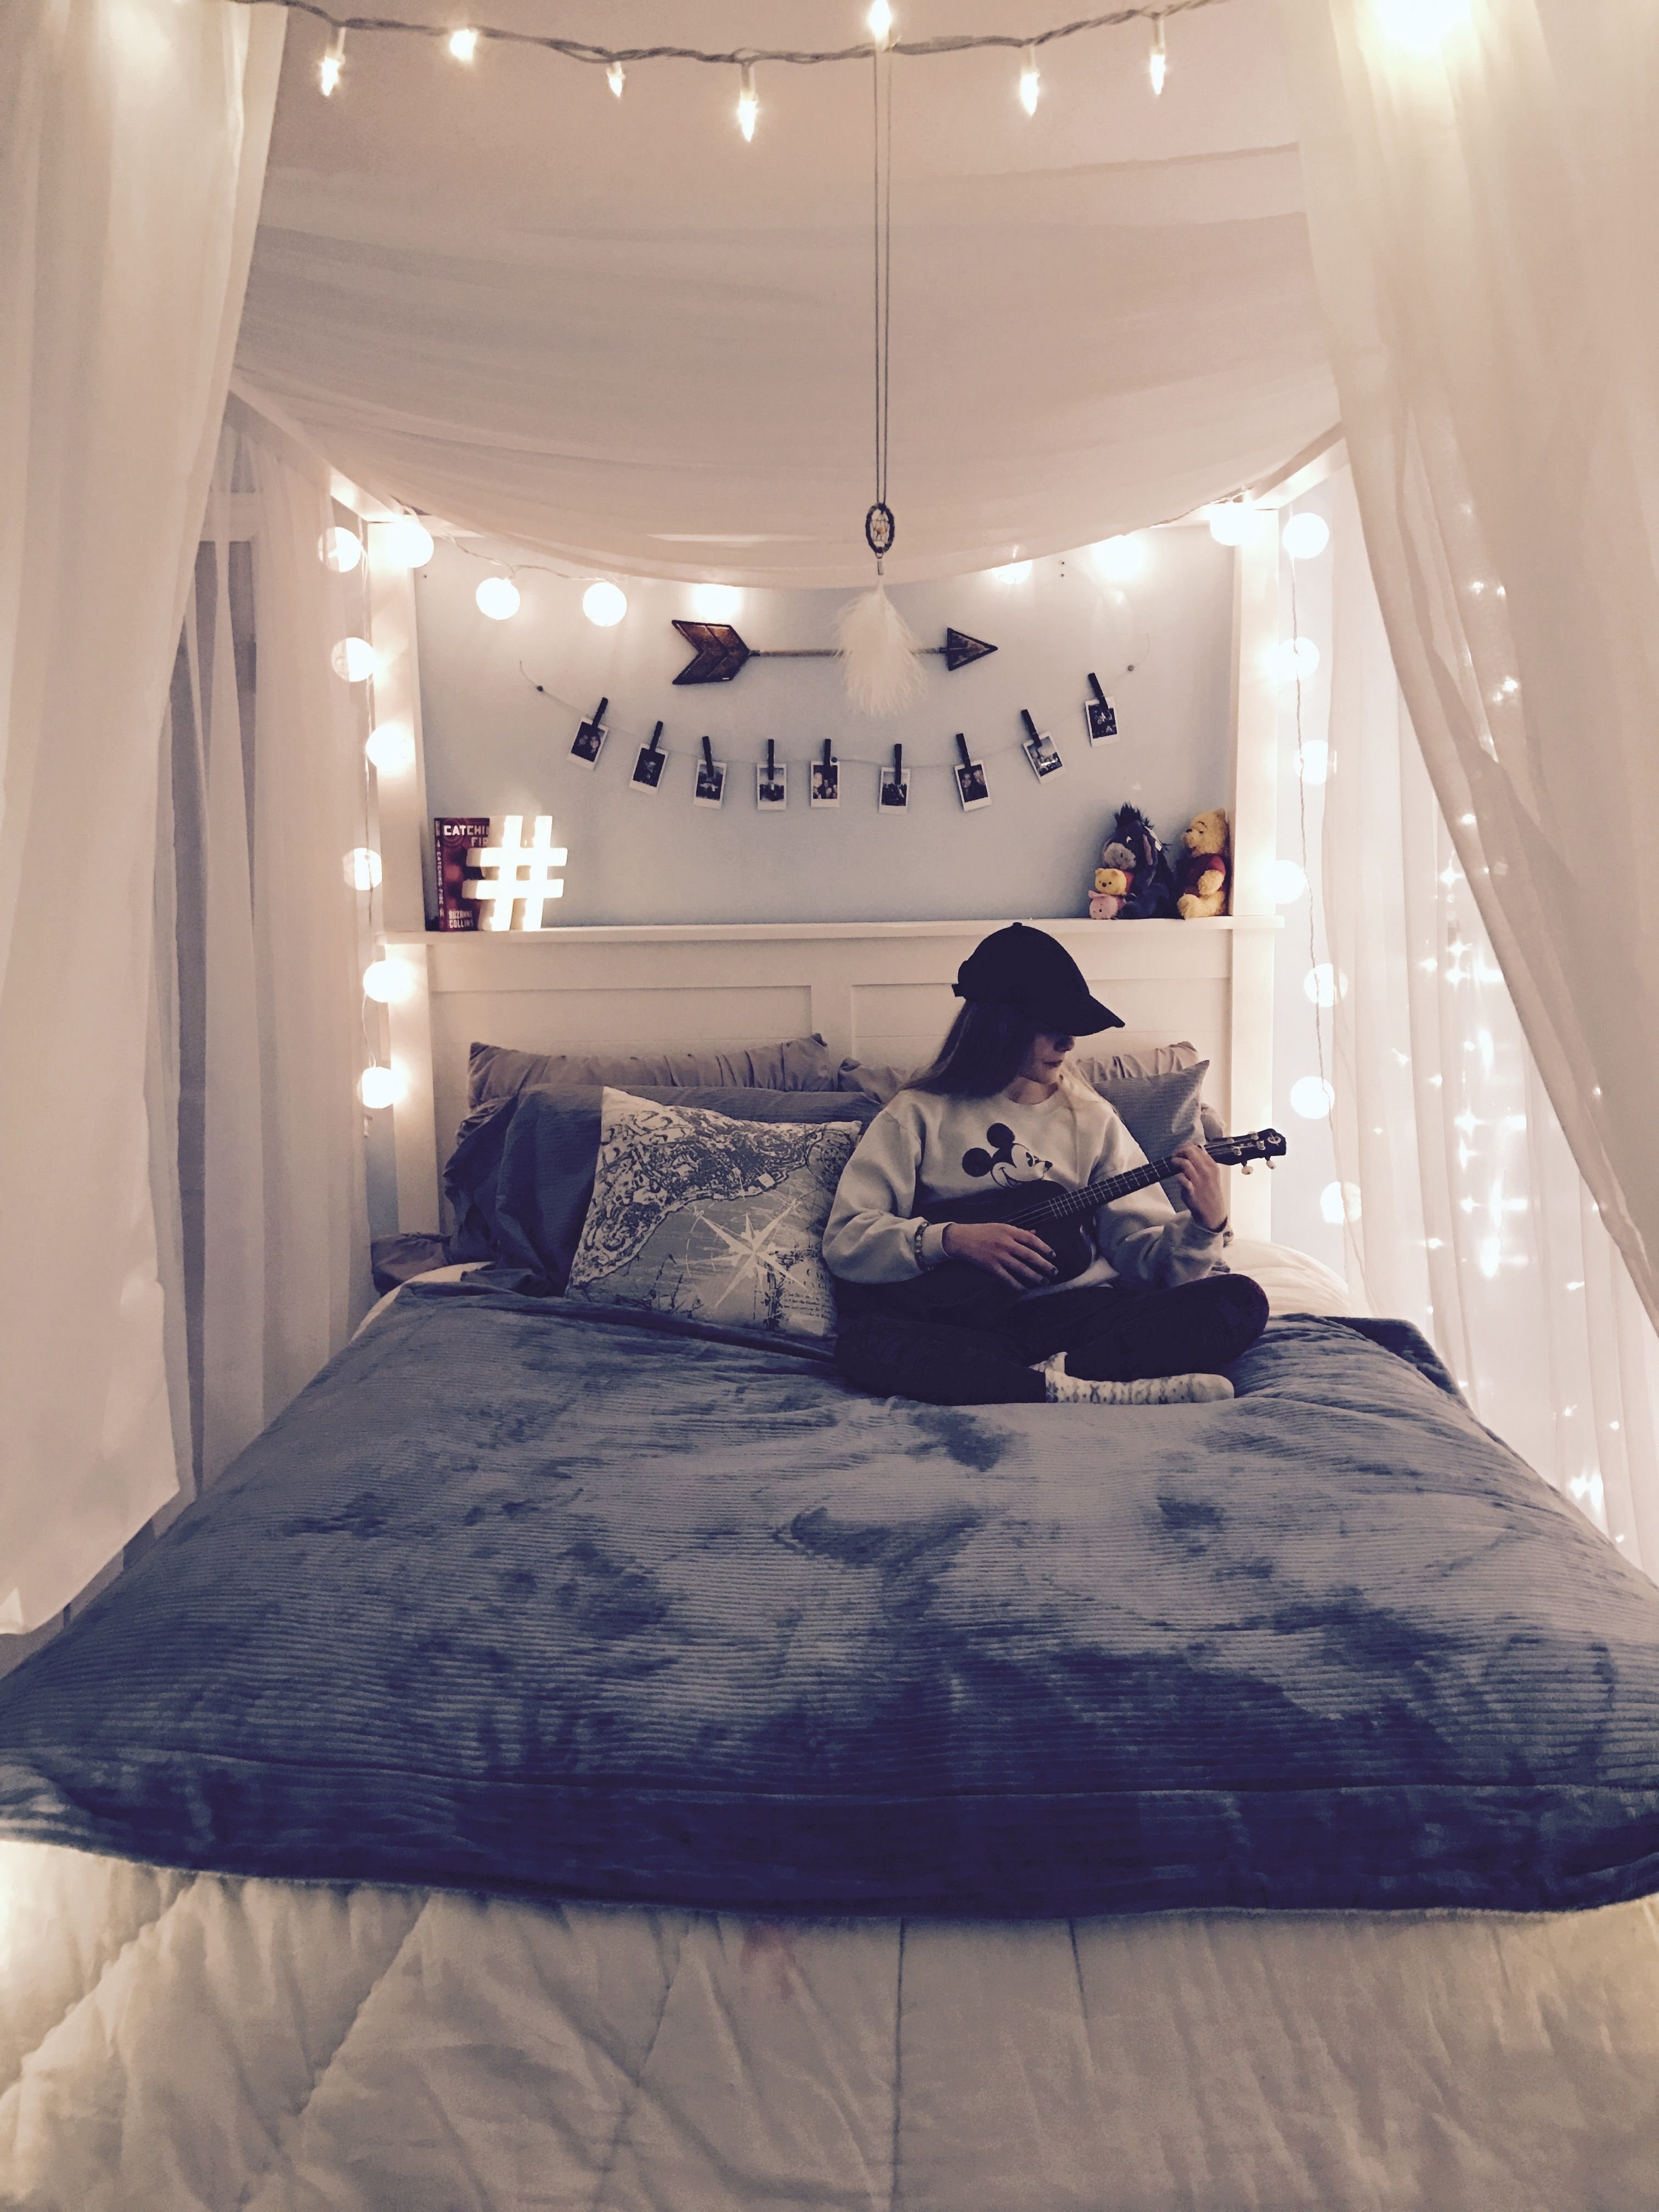 10 Famous Bedroom Ideas For Teenage Girls teen bedroom makeover ideas teen bedrooms and diy room decor 3 2022